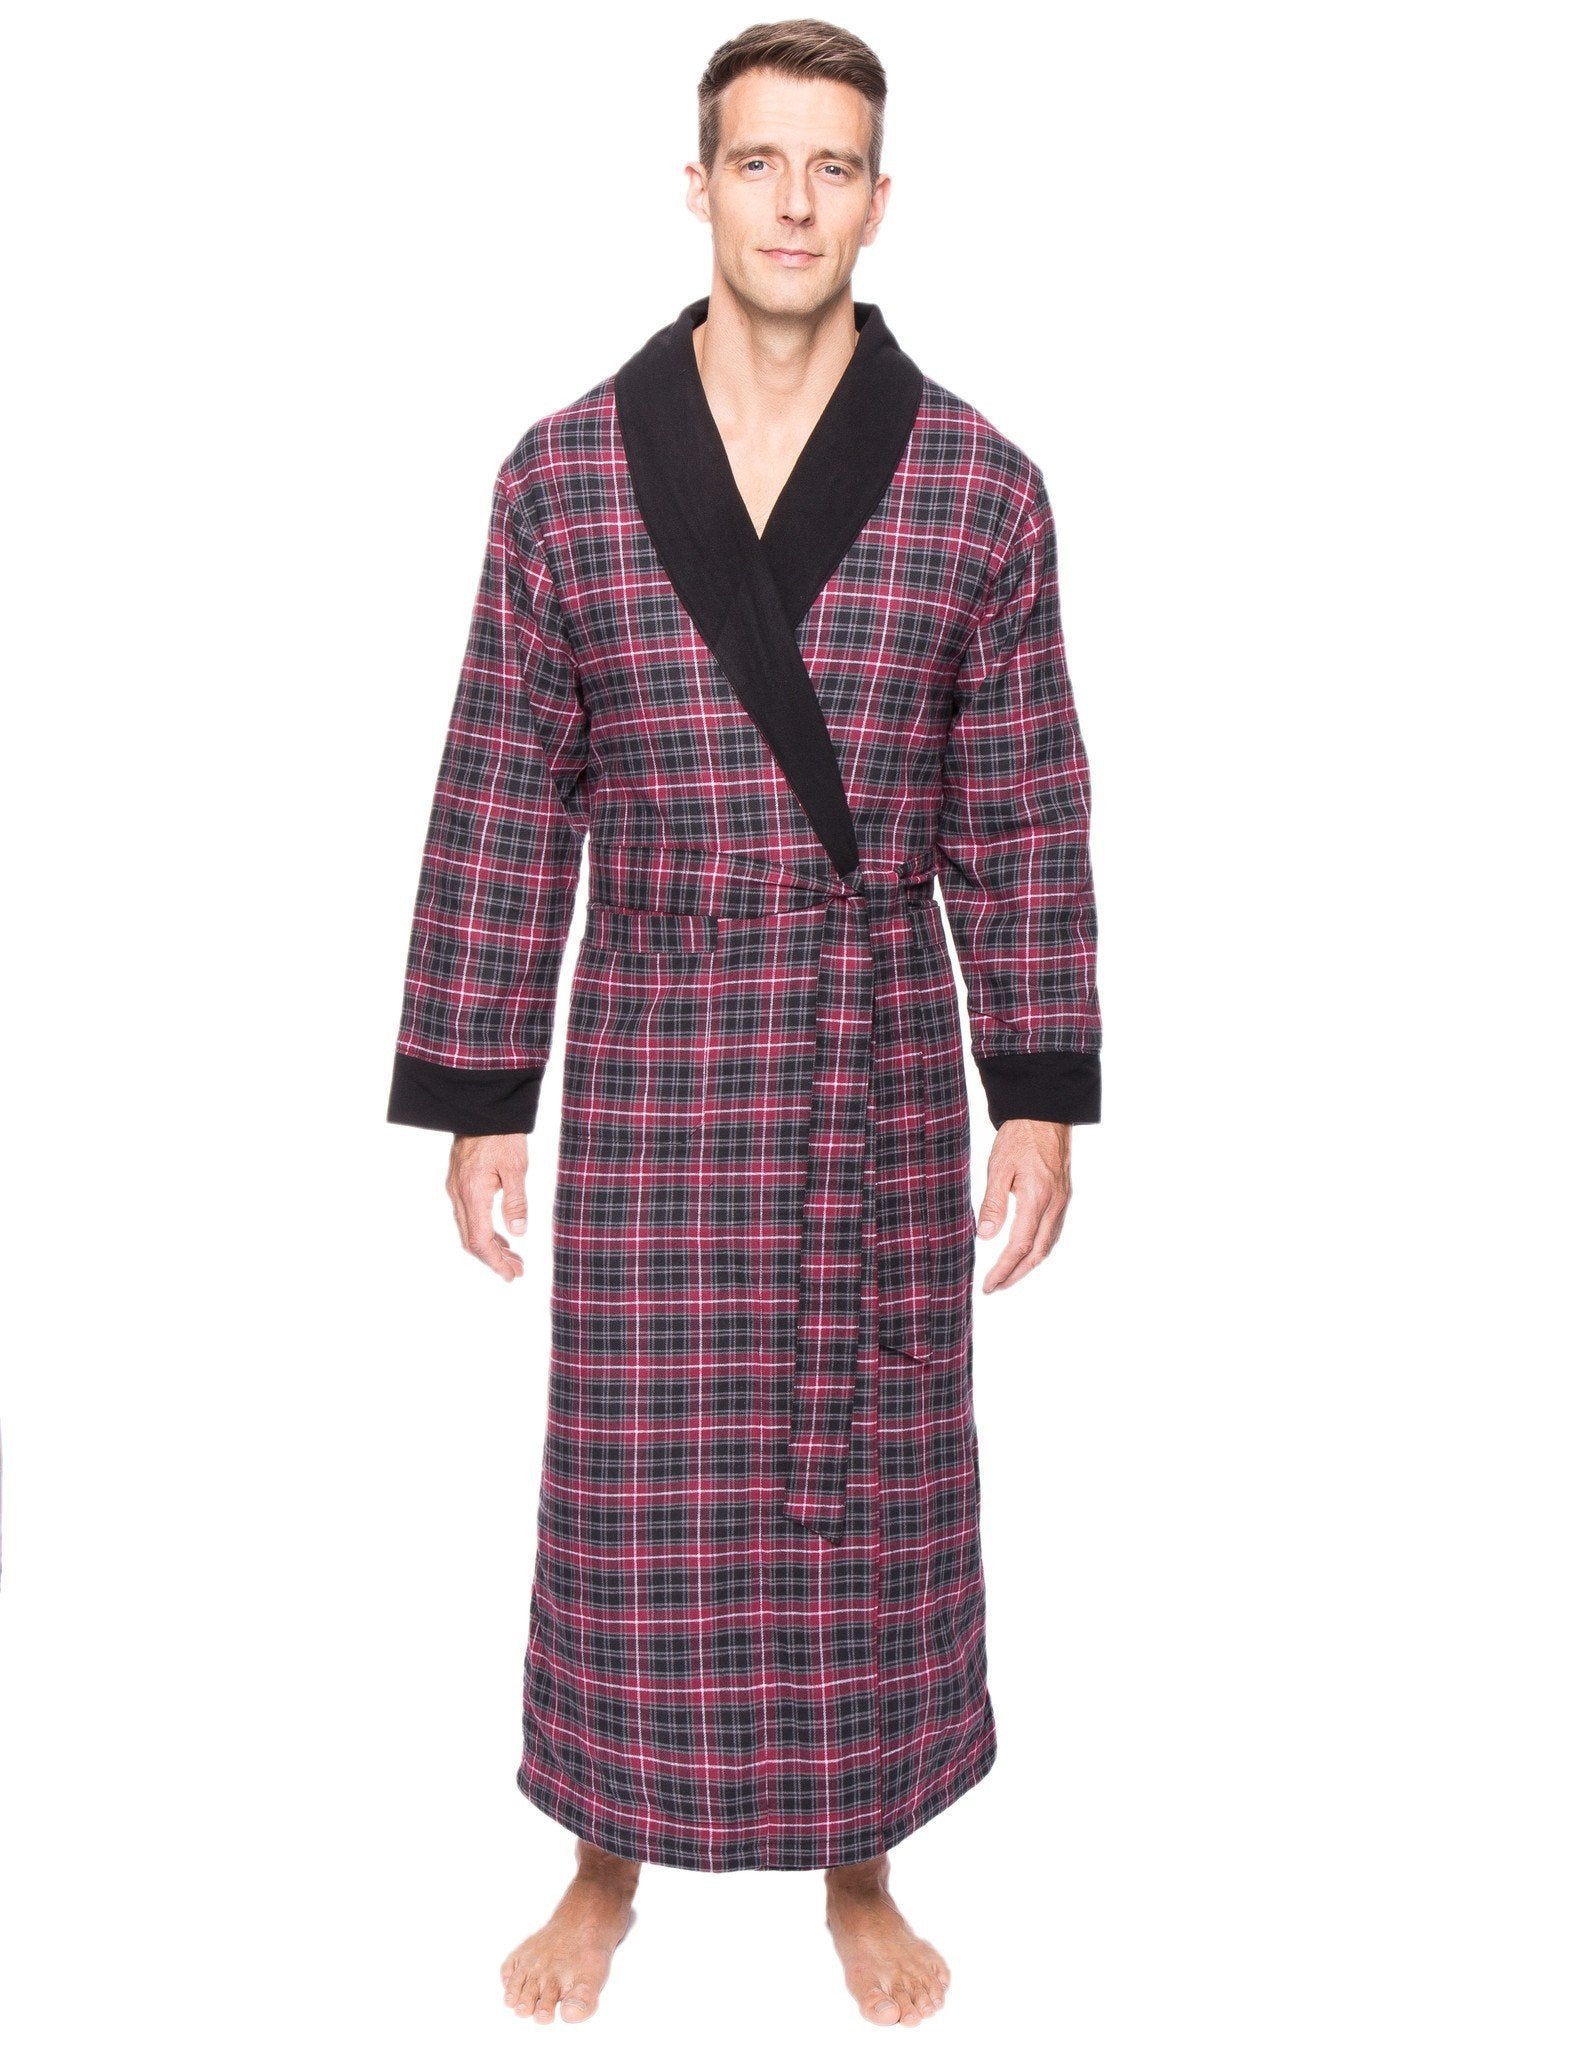 Men's Premium 100% Cotton Flannel Fleece Lined Robe - Burgundy/Grey